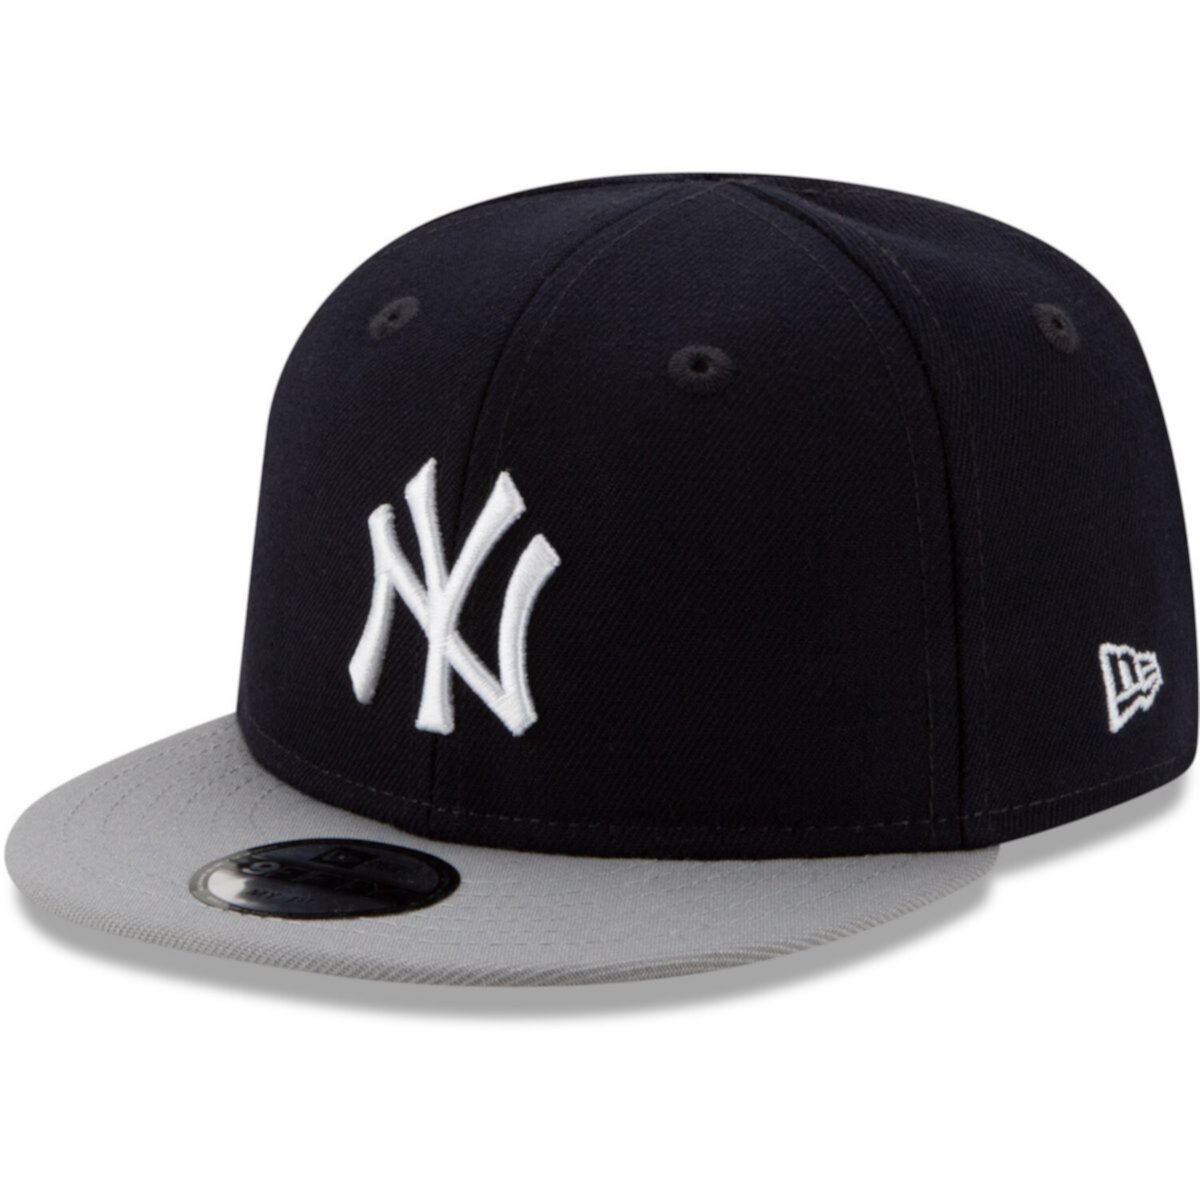 Infant New Era Navy New York Yankees Моя первая шляпа 9FIFTY New Era